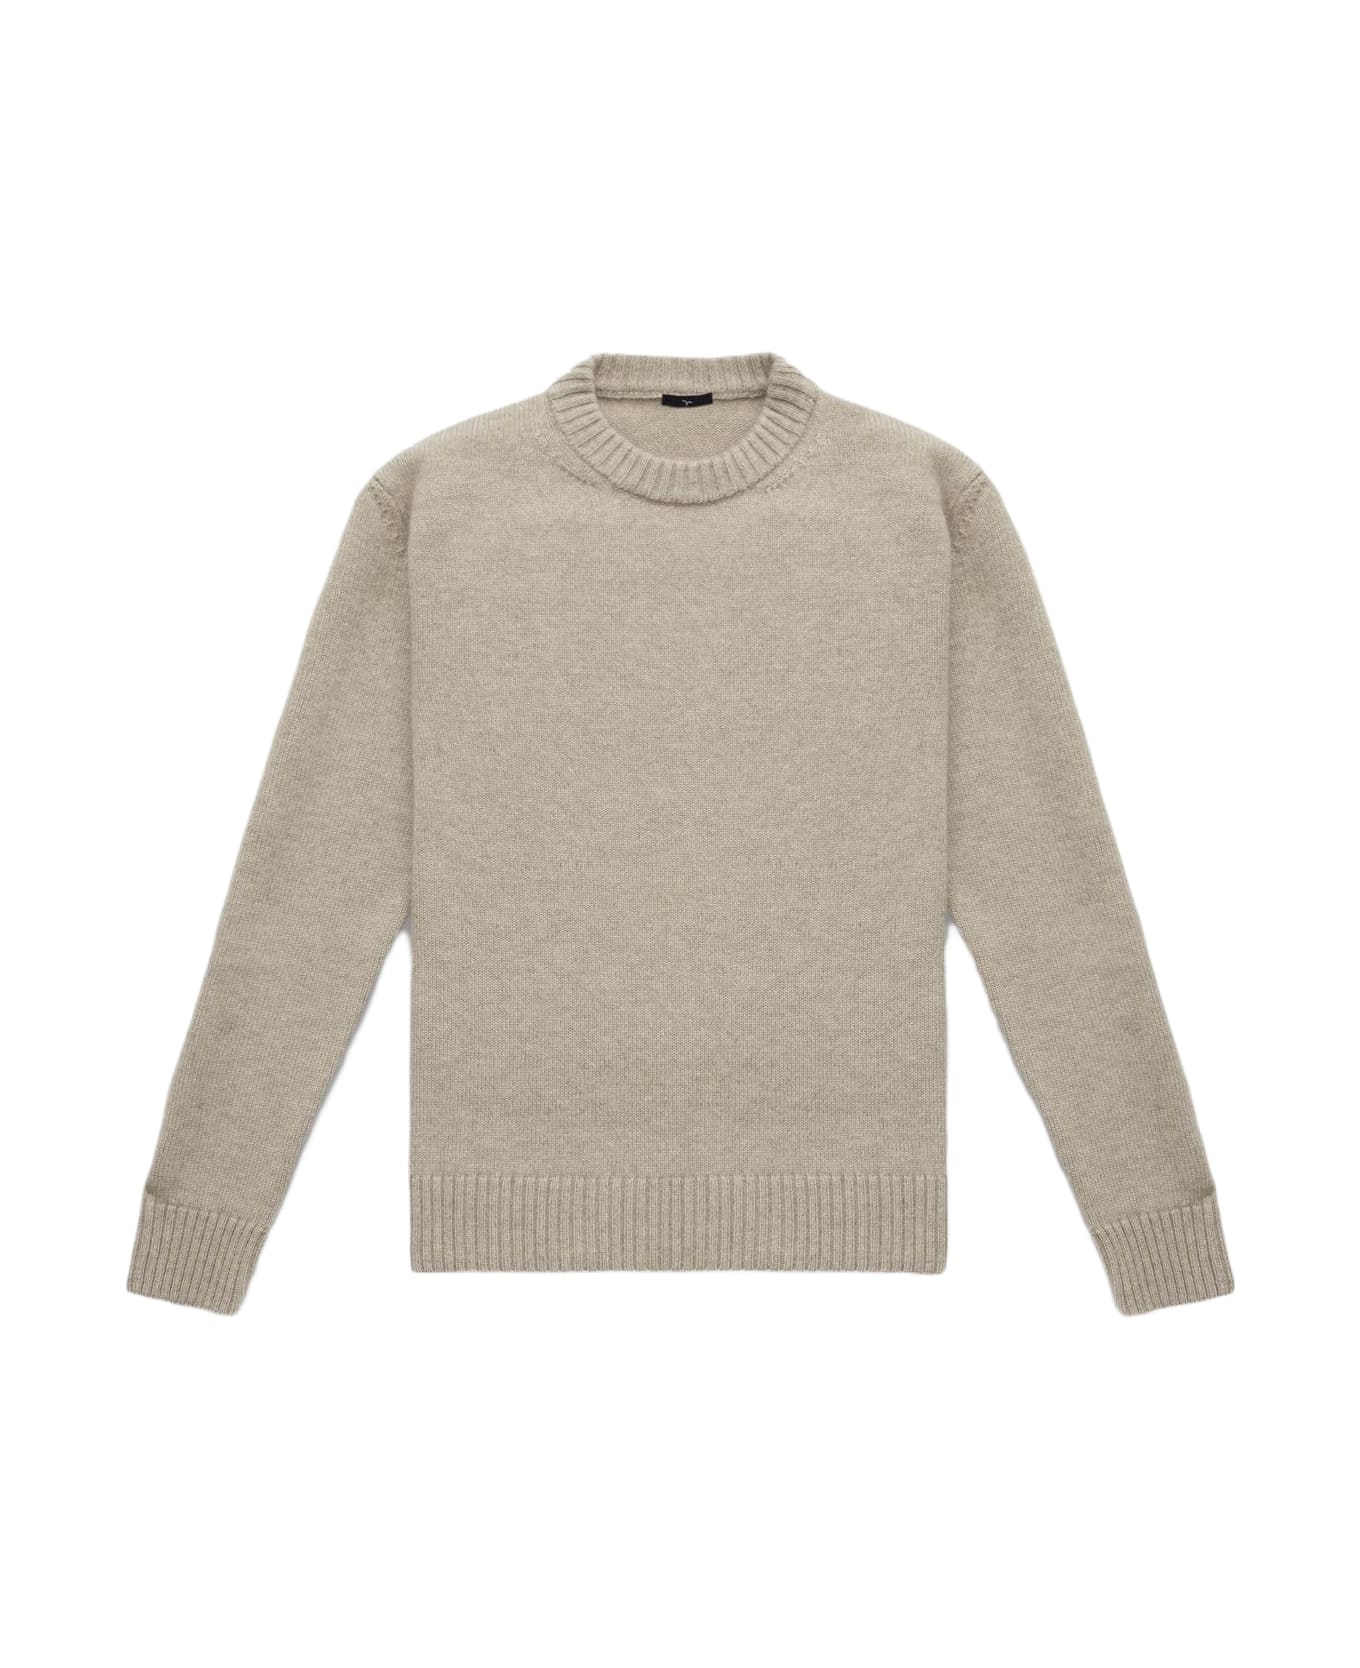 Larusmiani Crew Neck Sweater 'diablerets' Sweater - Beige